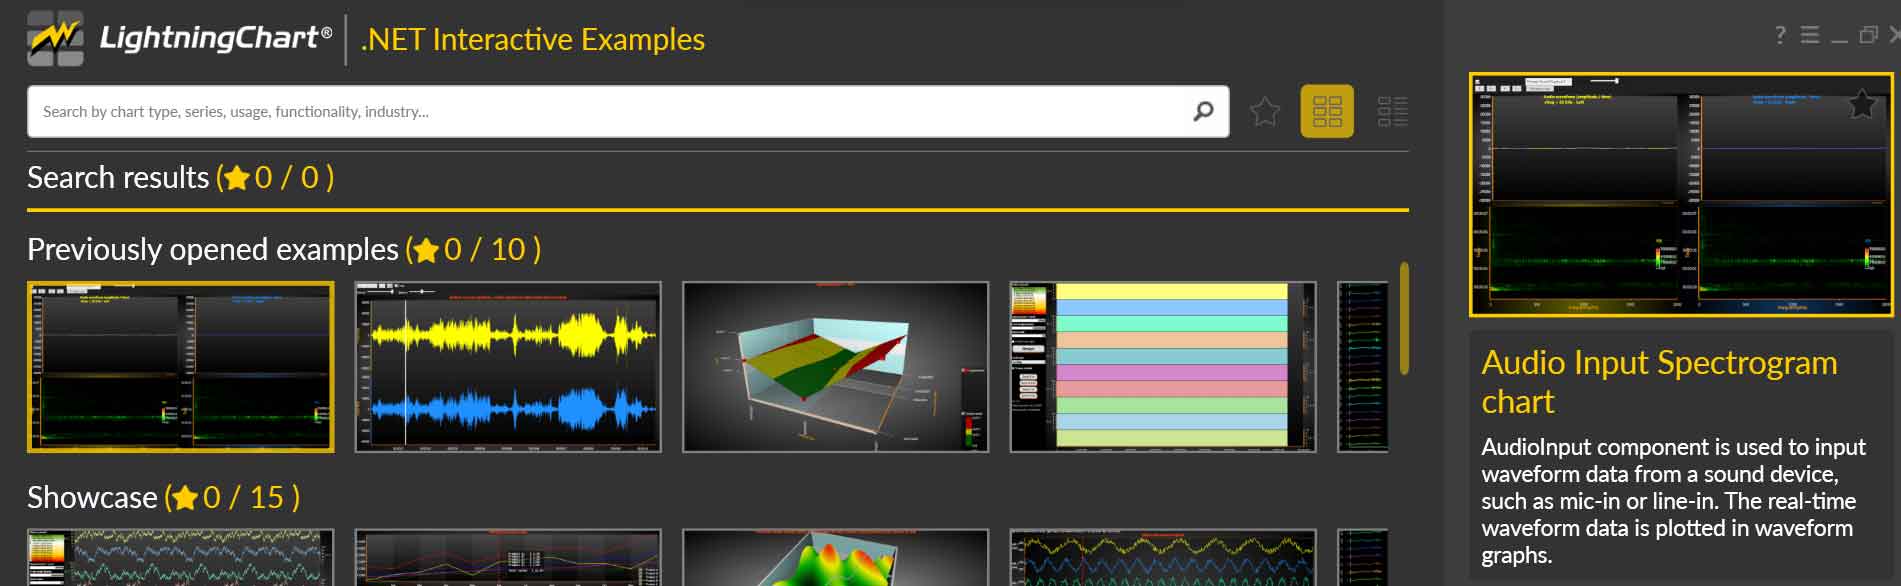 audio-input-spectrogram-chart-Interactive-Examples